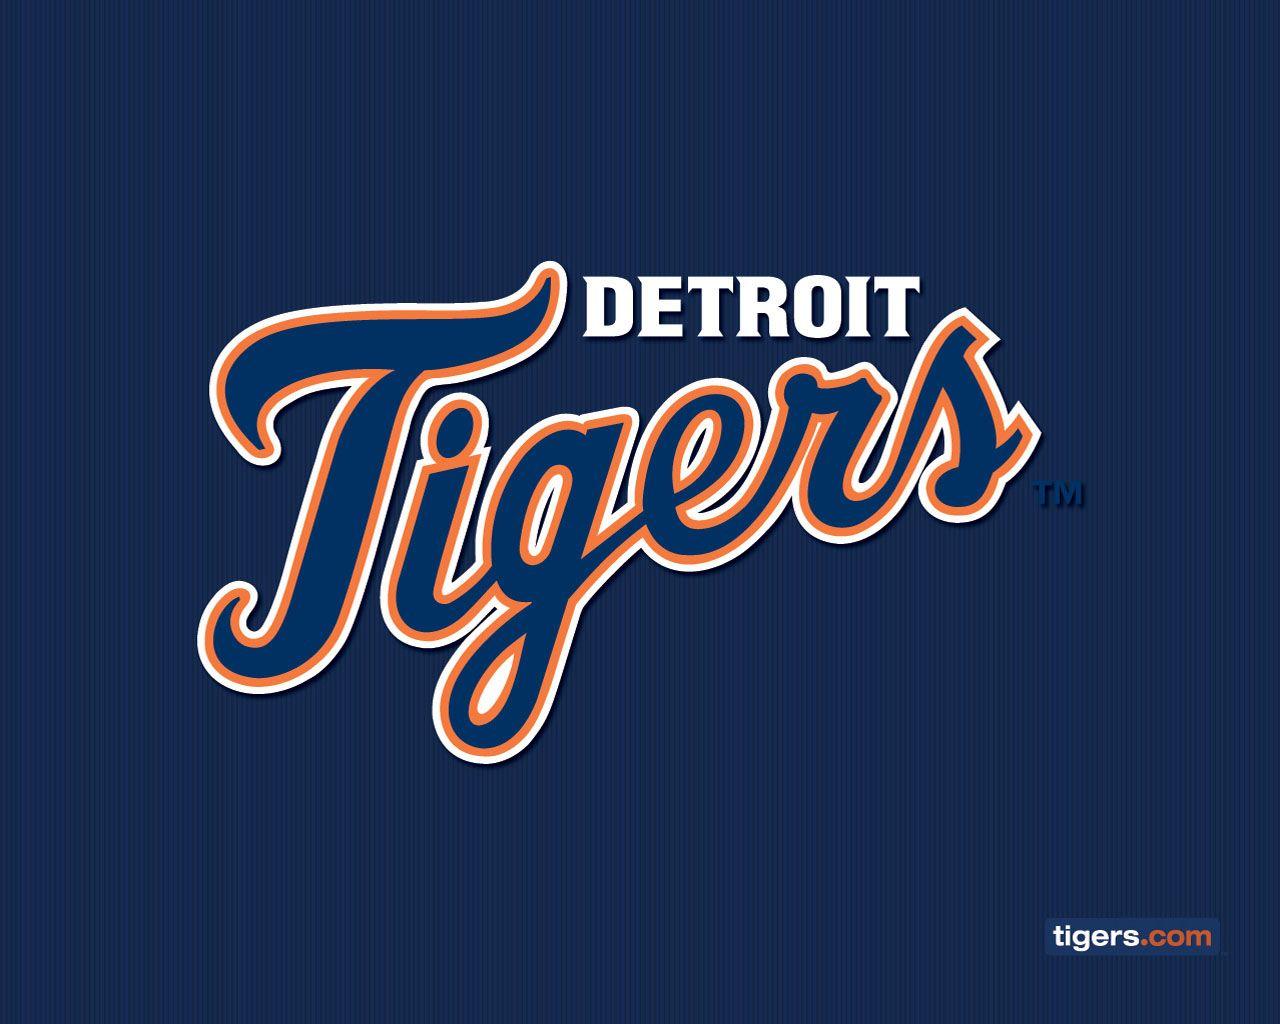 Detroit Tigers Wallpaper. Detroit Tigers Background